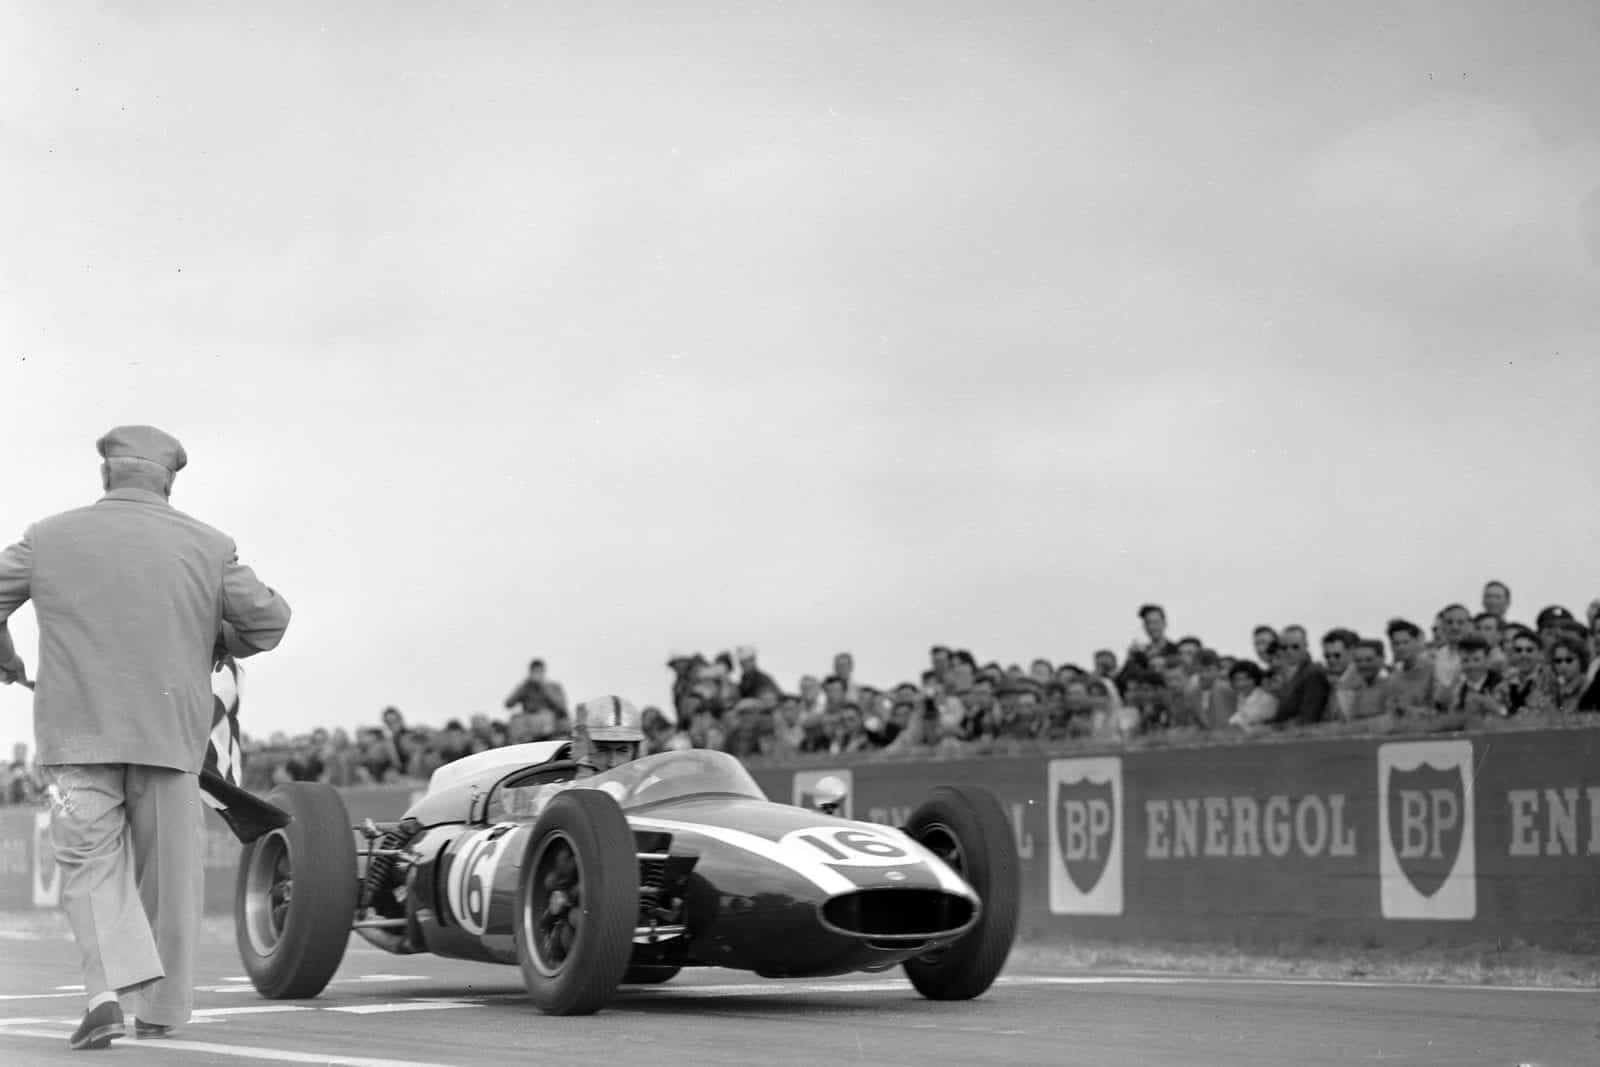 Jack Brabham takes his 3rd win of the season